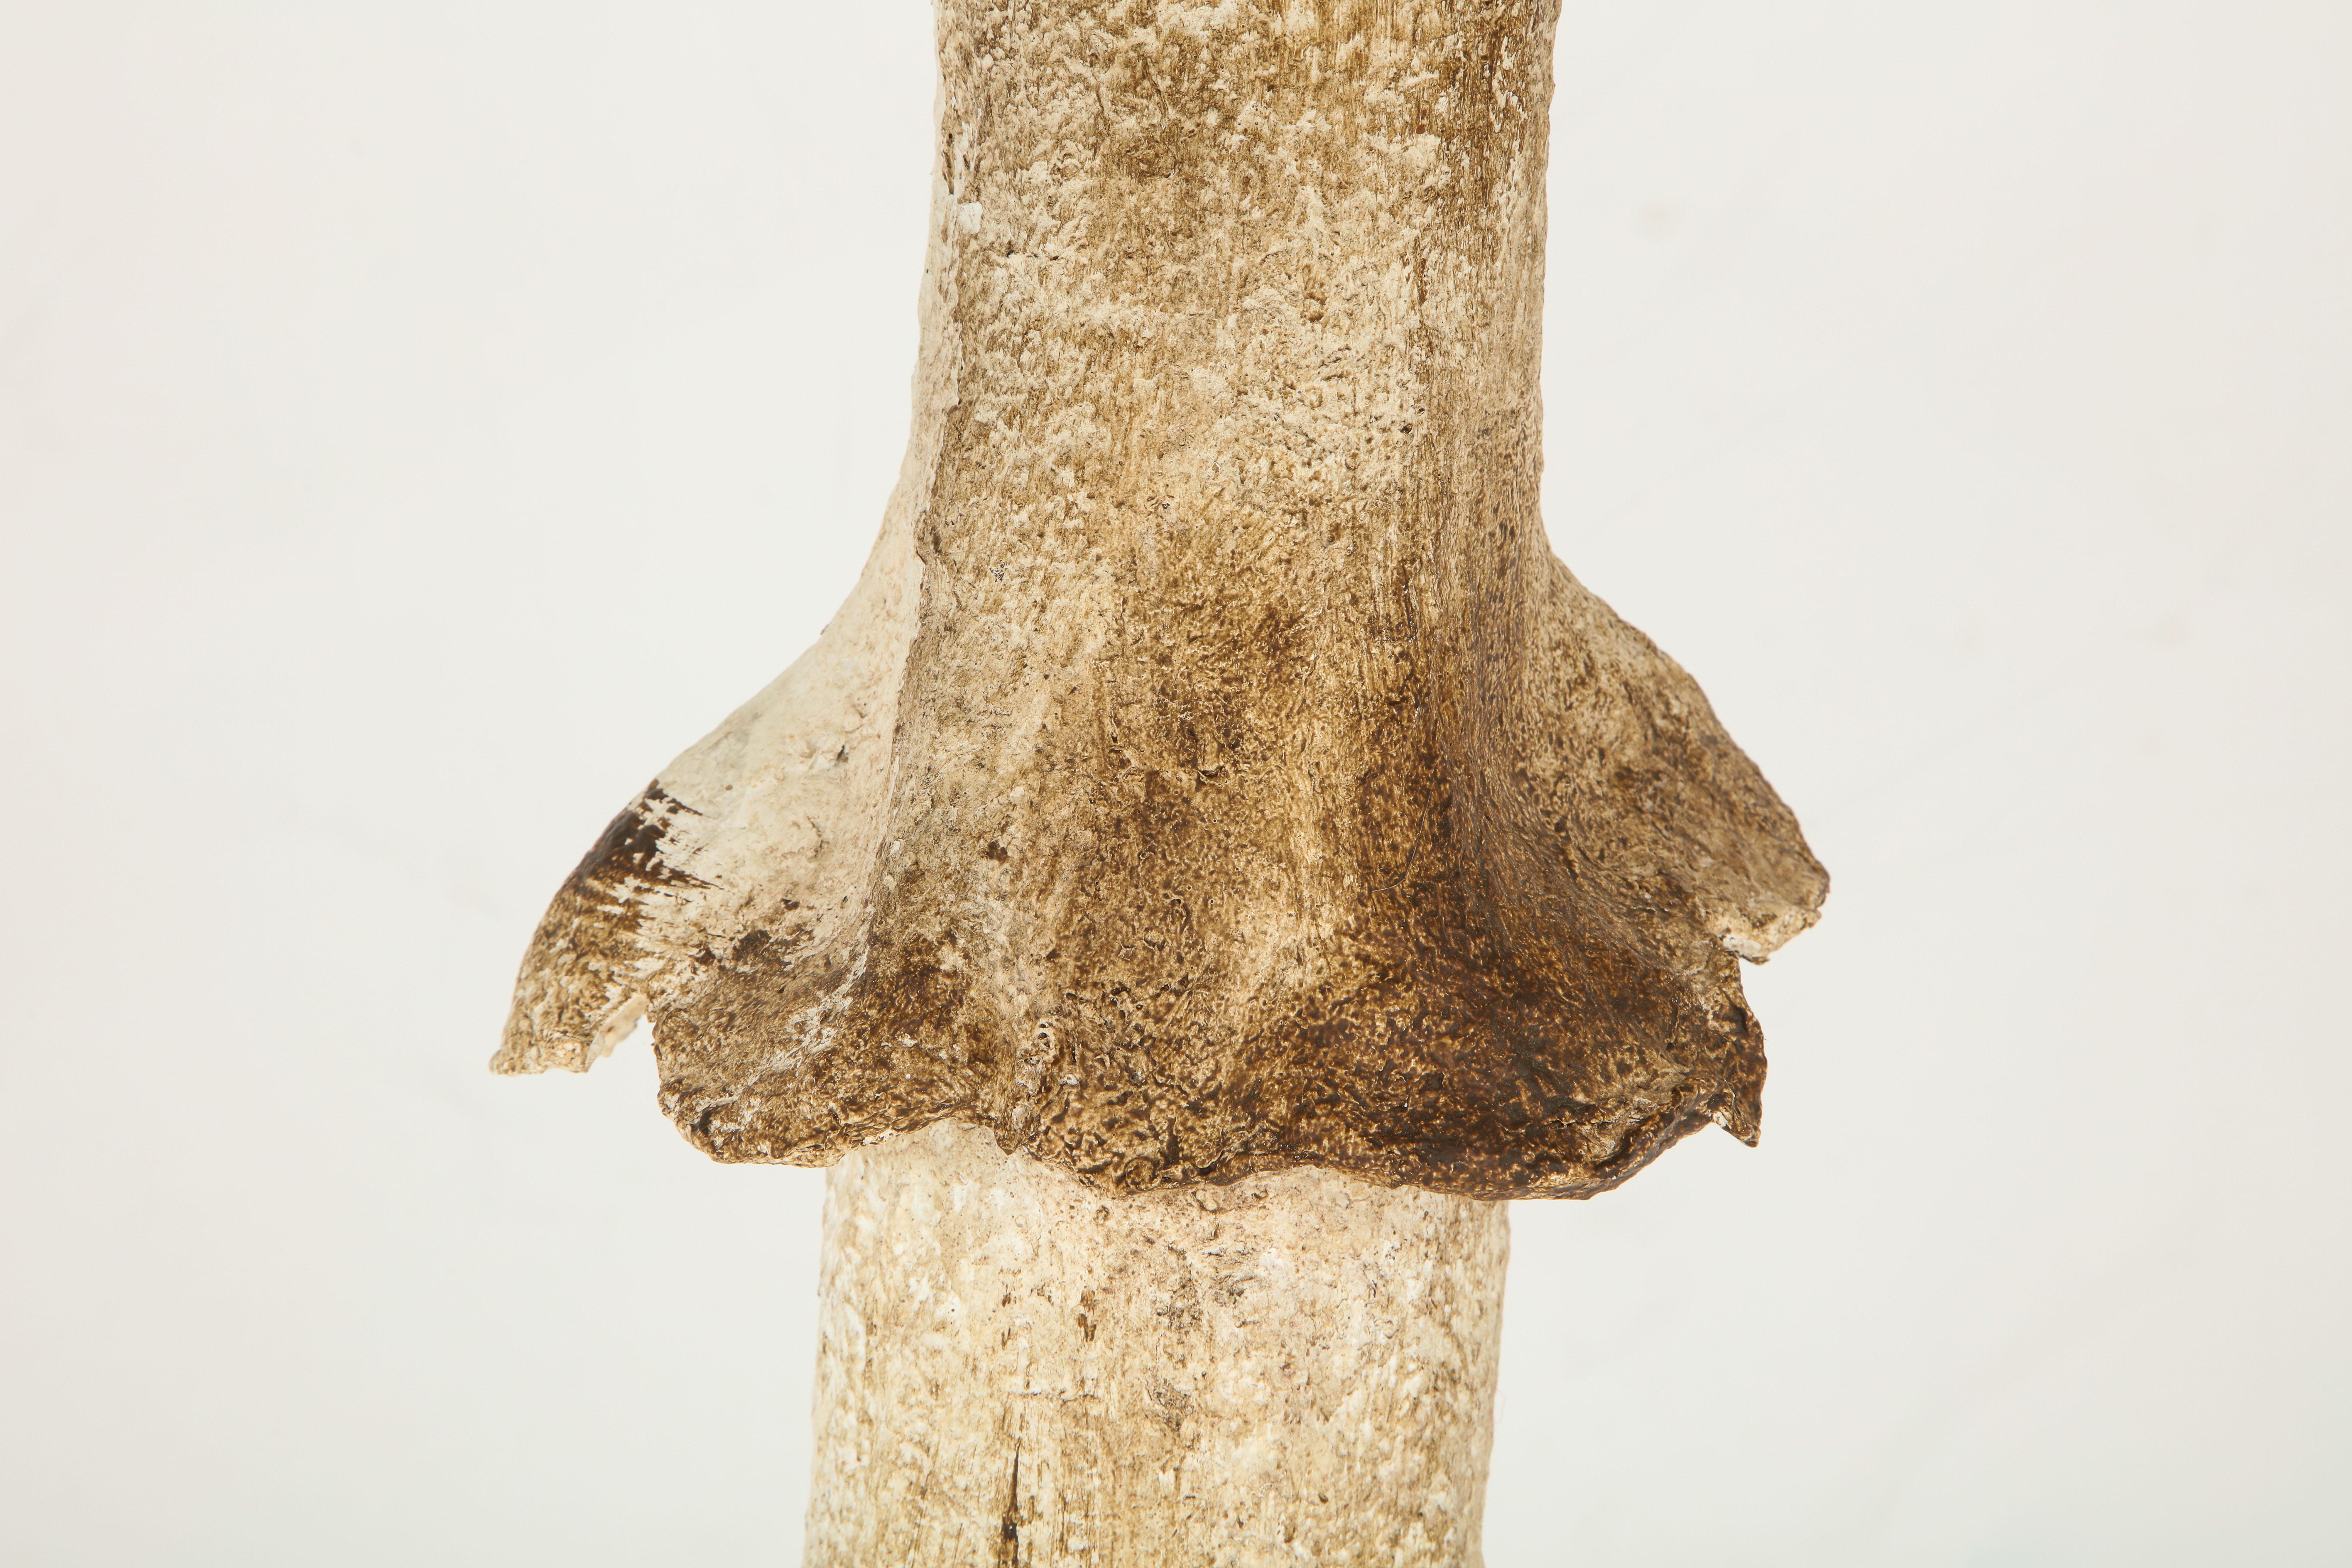 Life-size papier mâché amanita muscaria mushroom.